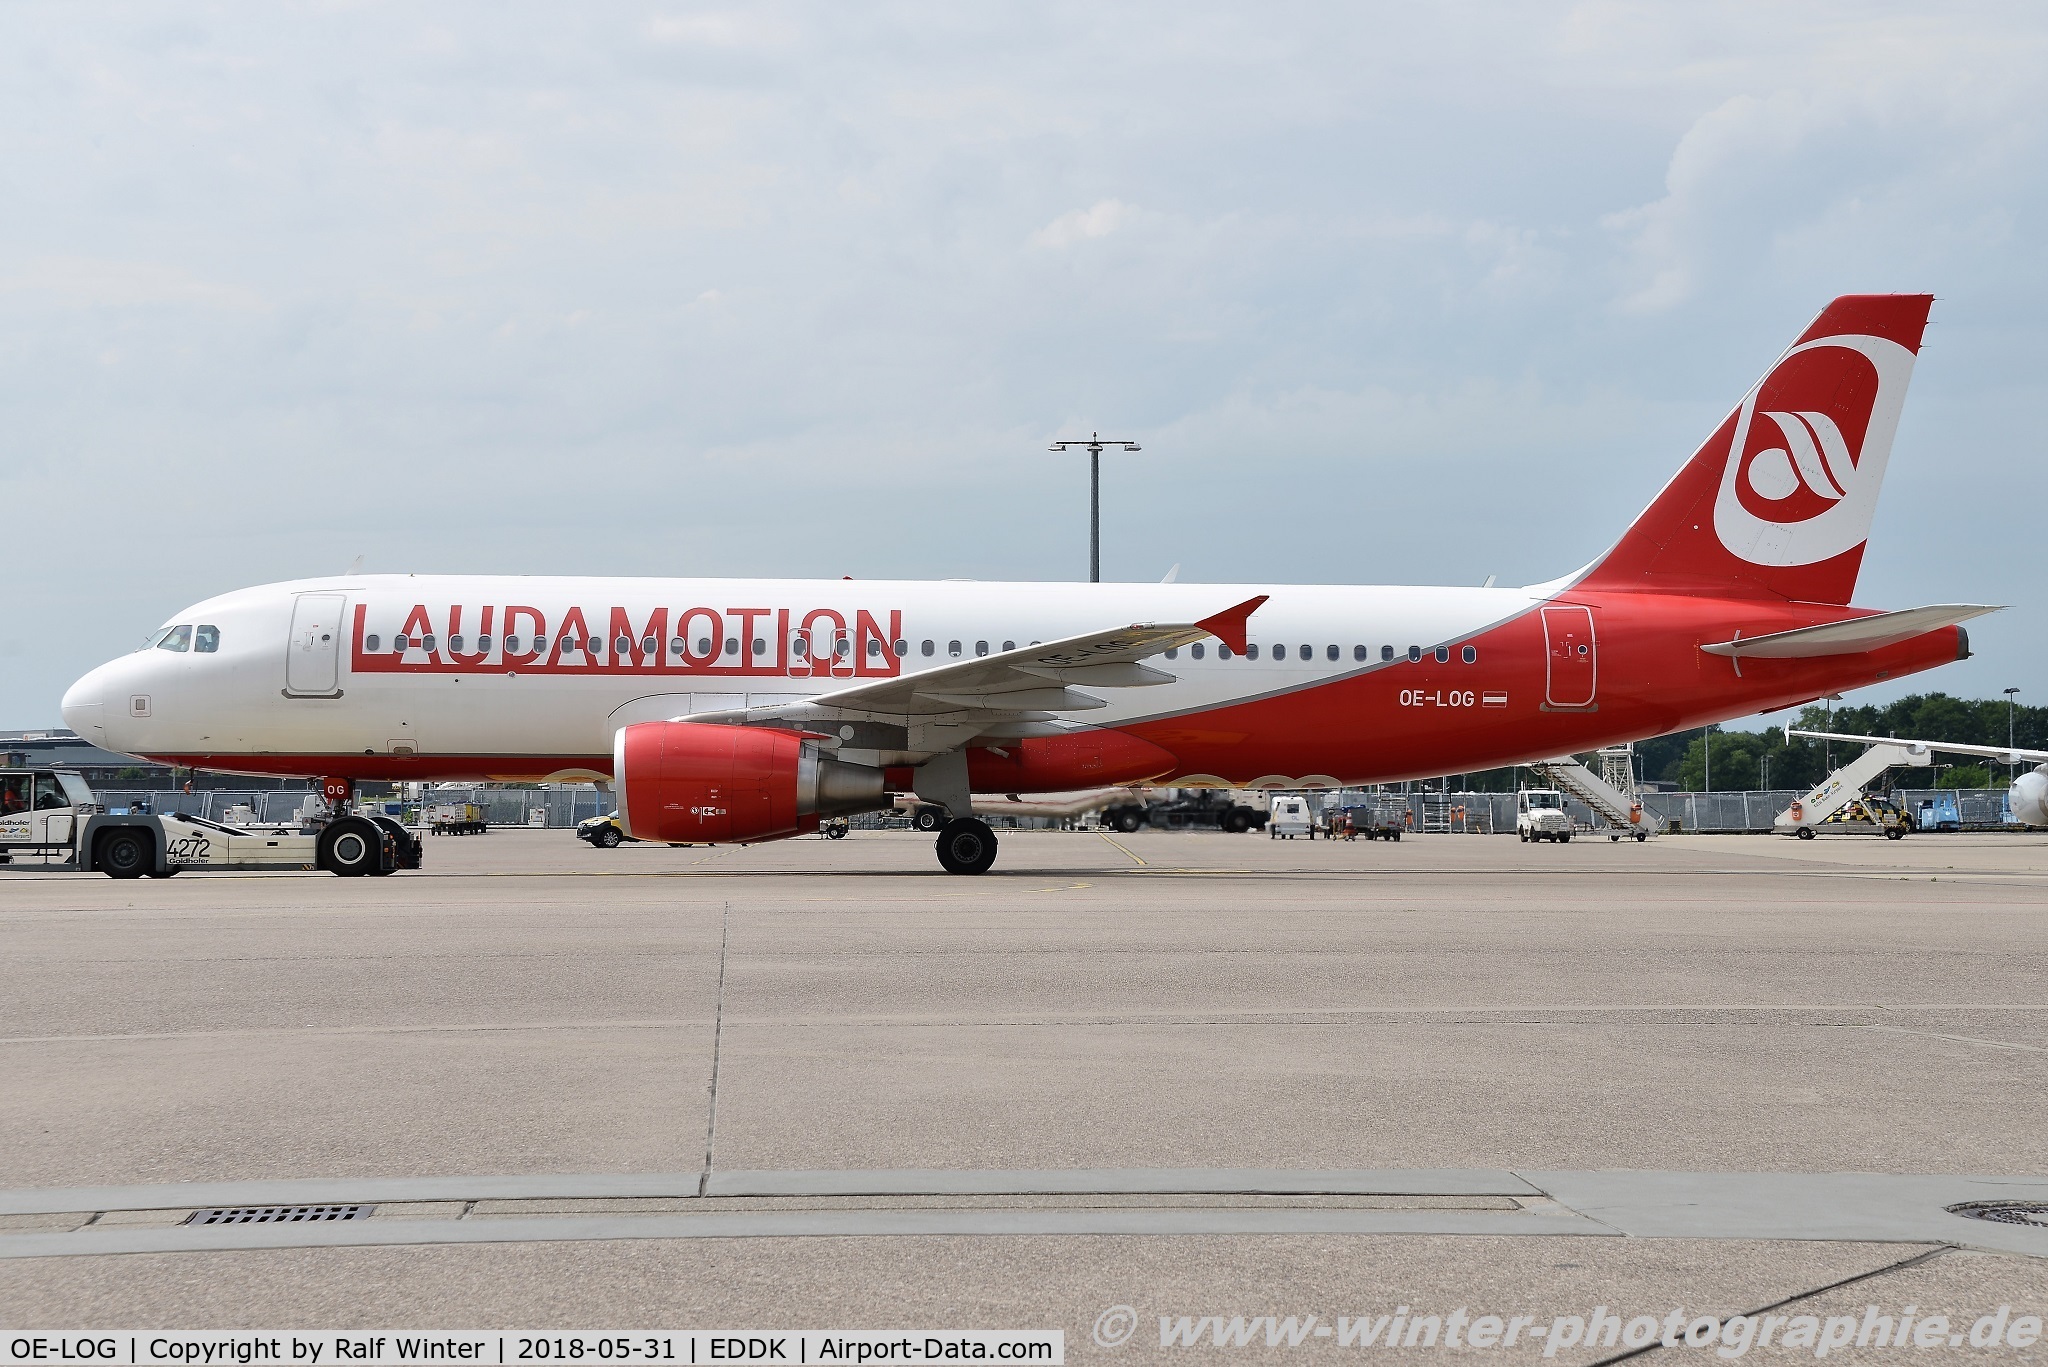 OE-LOG, 2010 Airbus A320-214 C/N 4187, Airbus A320-214 - OE LDM LaudaMotion - 4187 - OE-LOG - 31.05.2018 - CGN